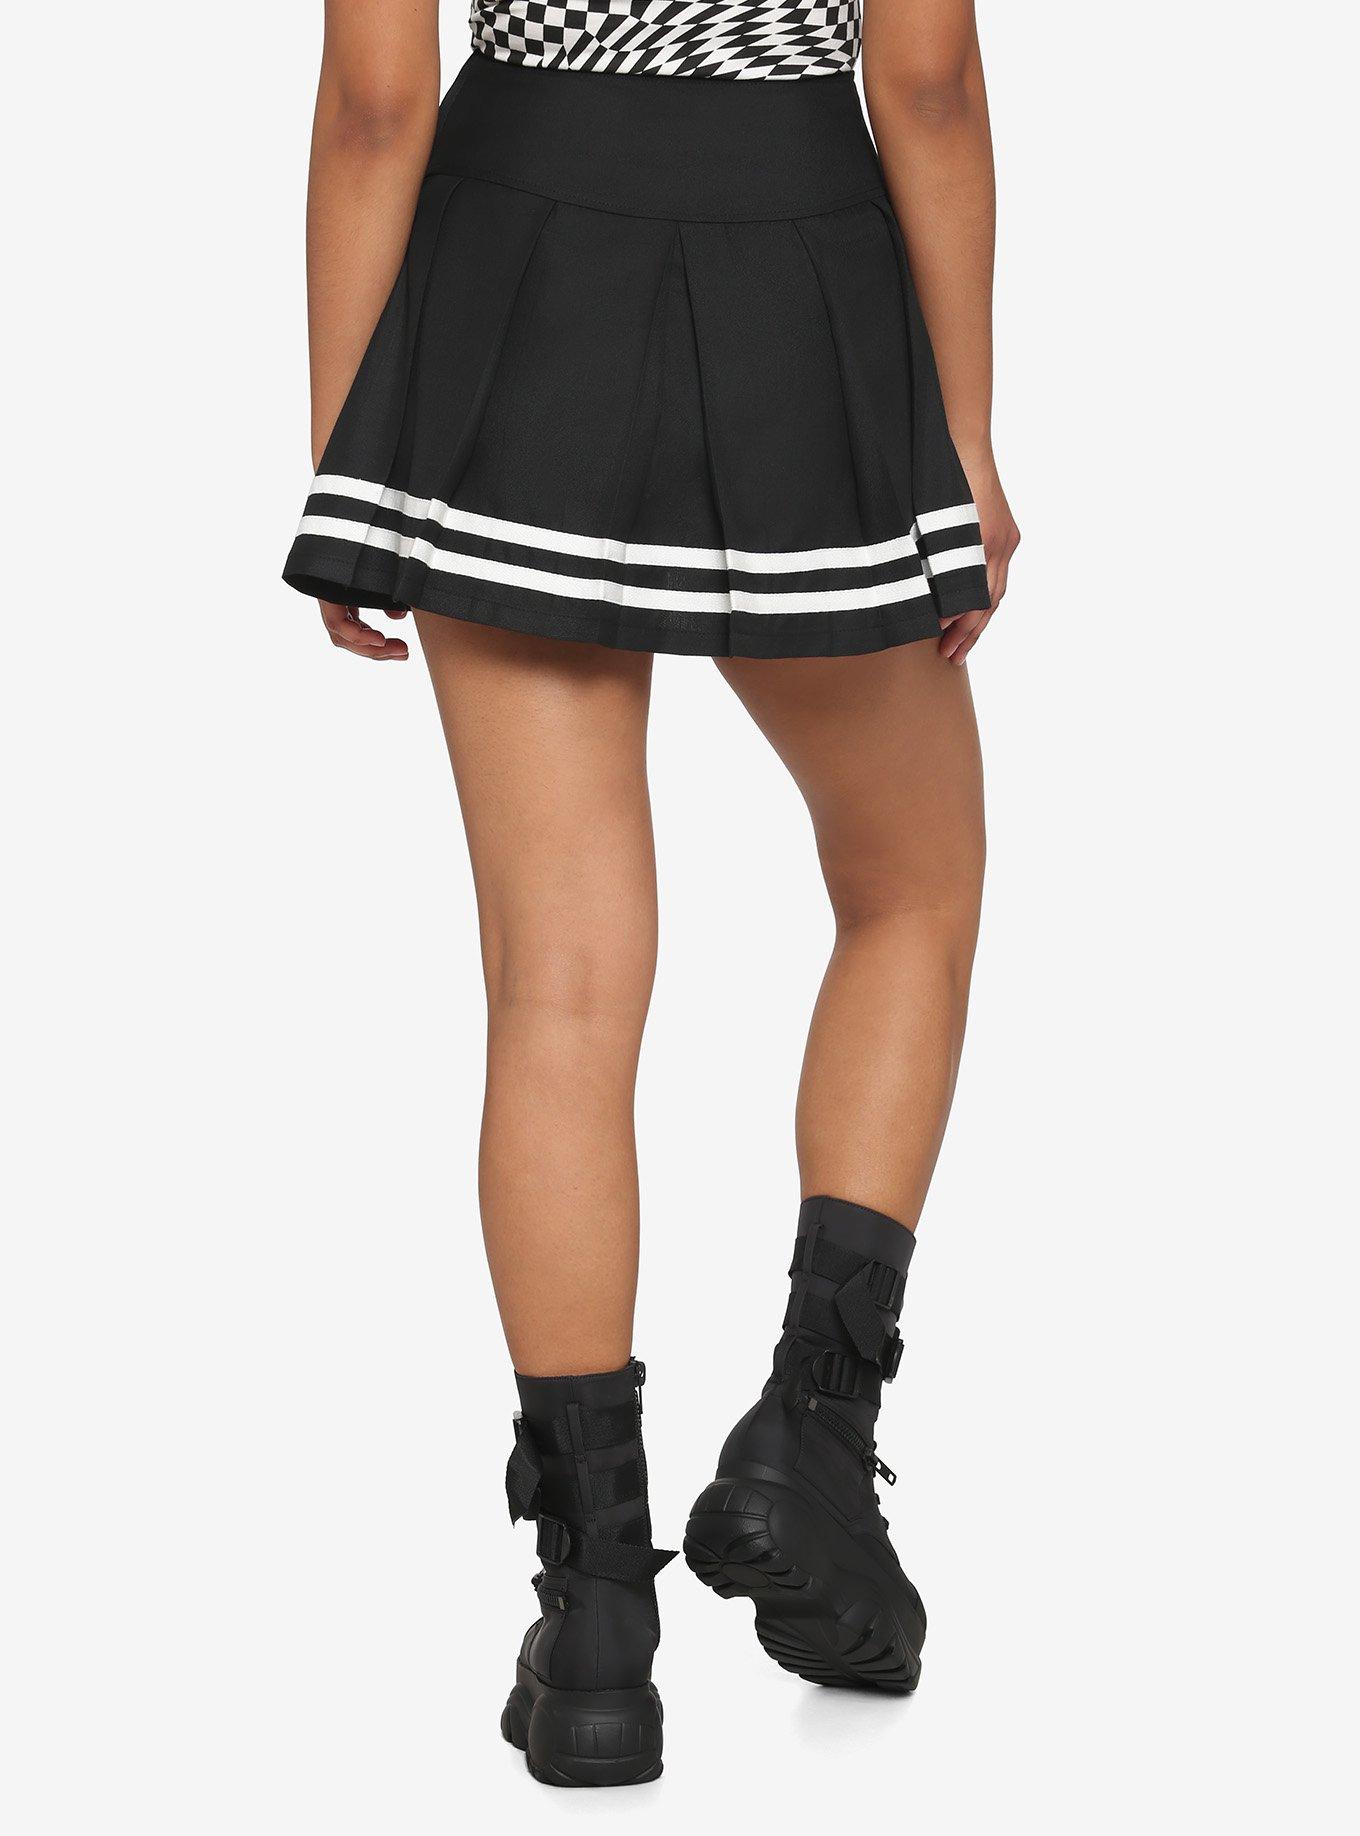 Black & White Lace-Up Pleated Skirt, BLACK, alternate